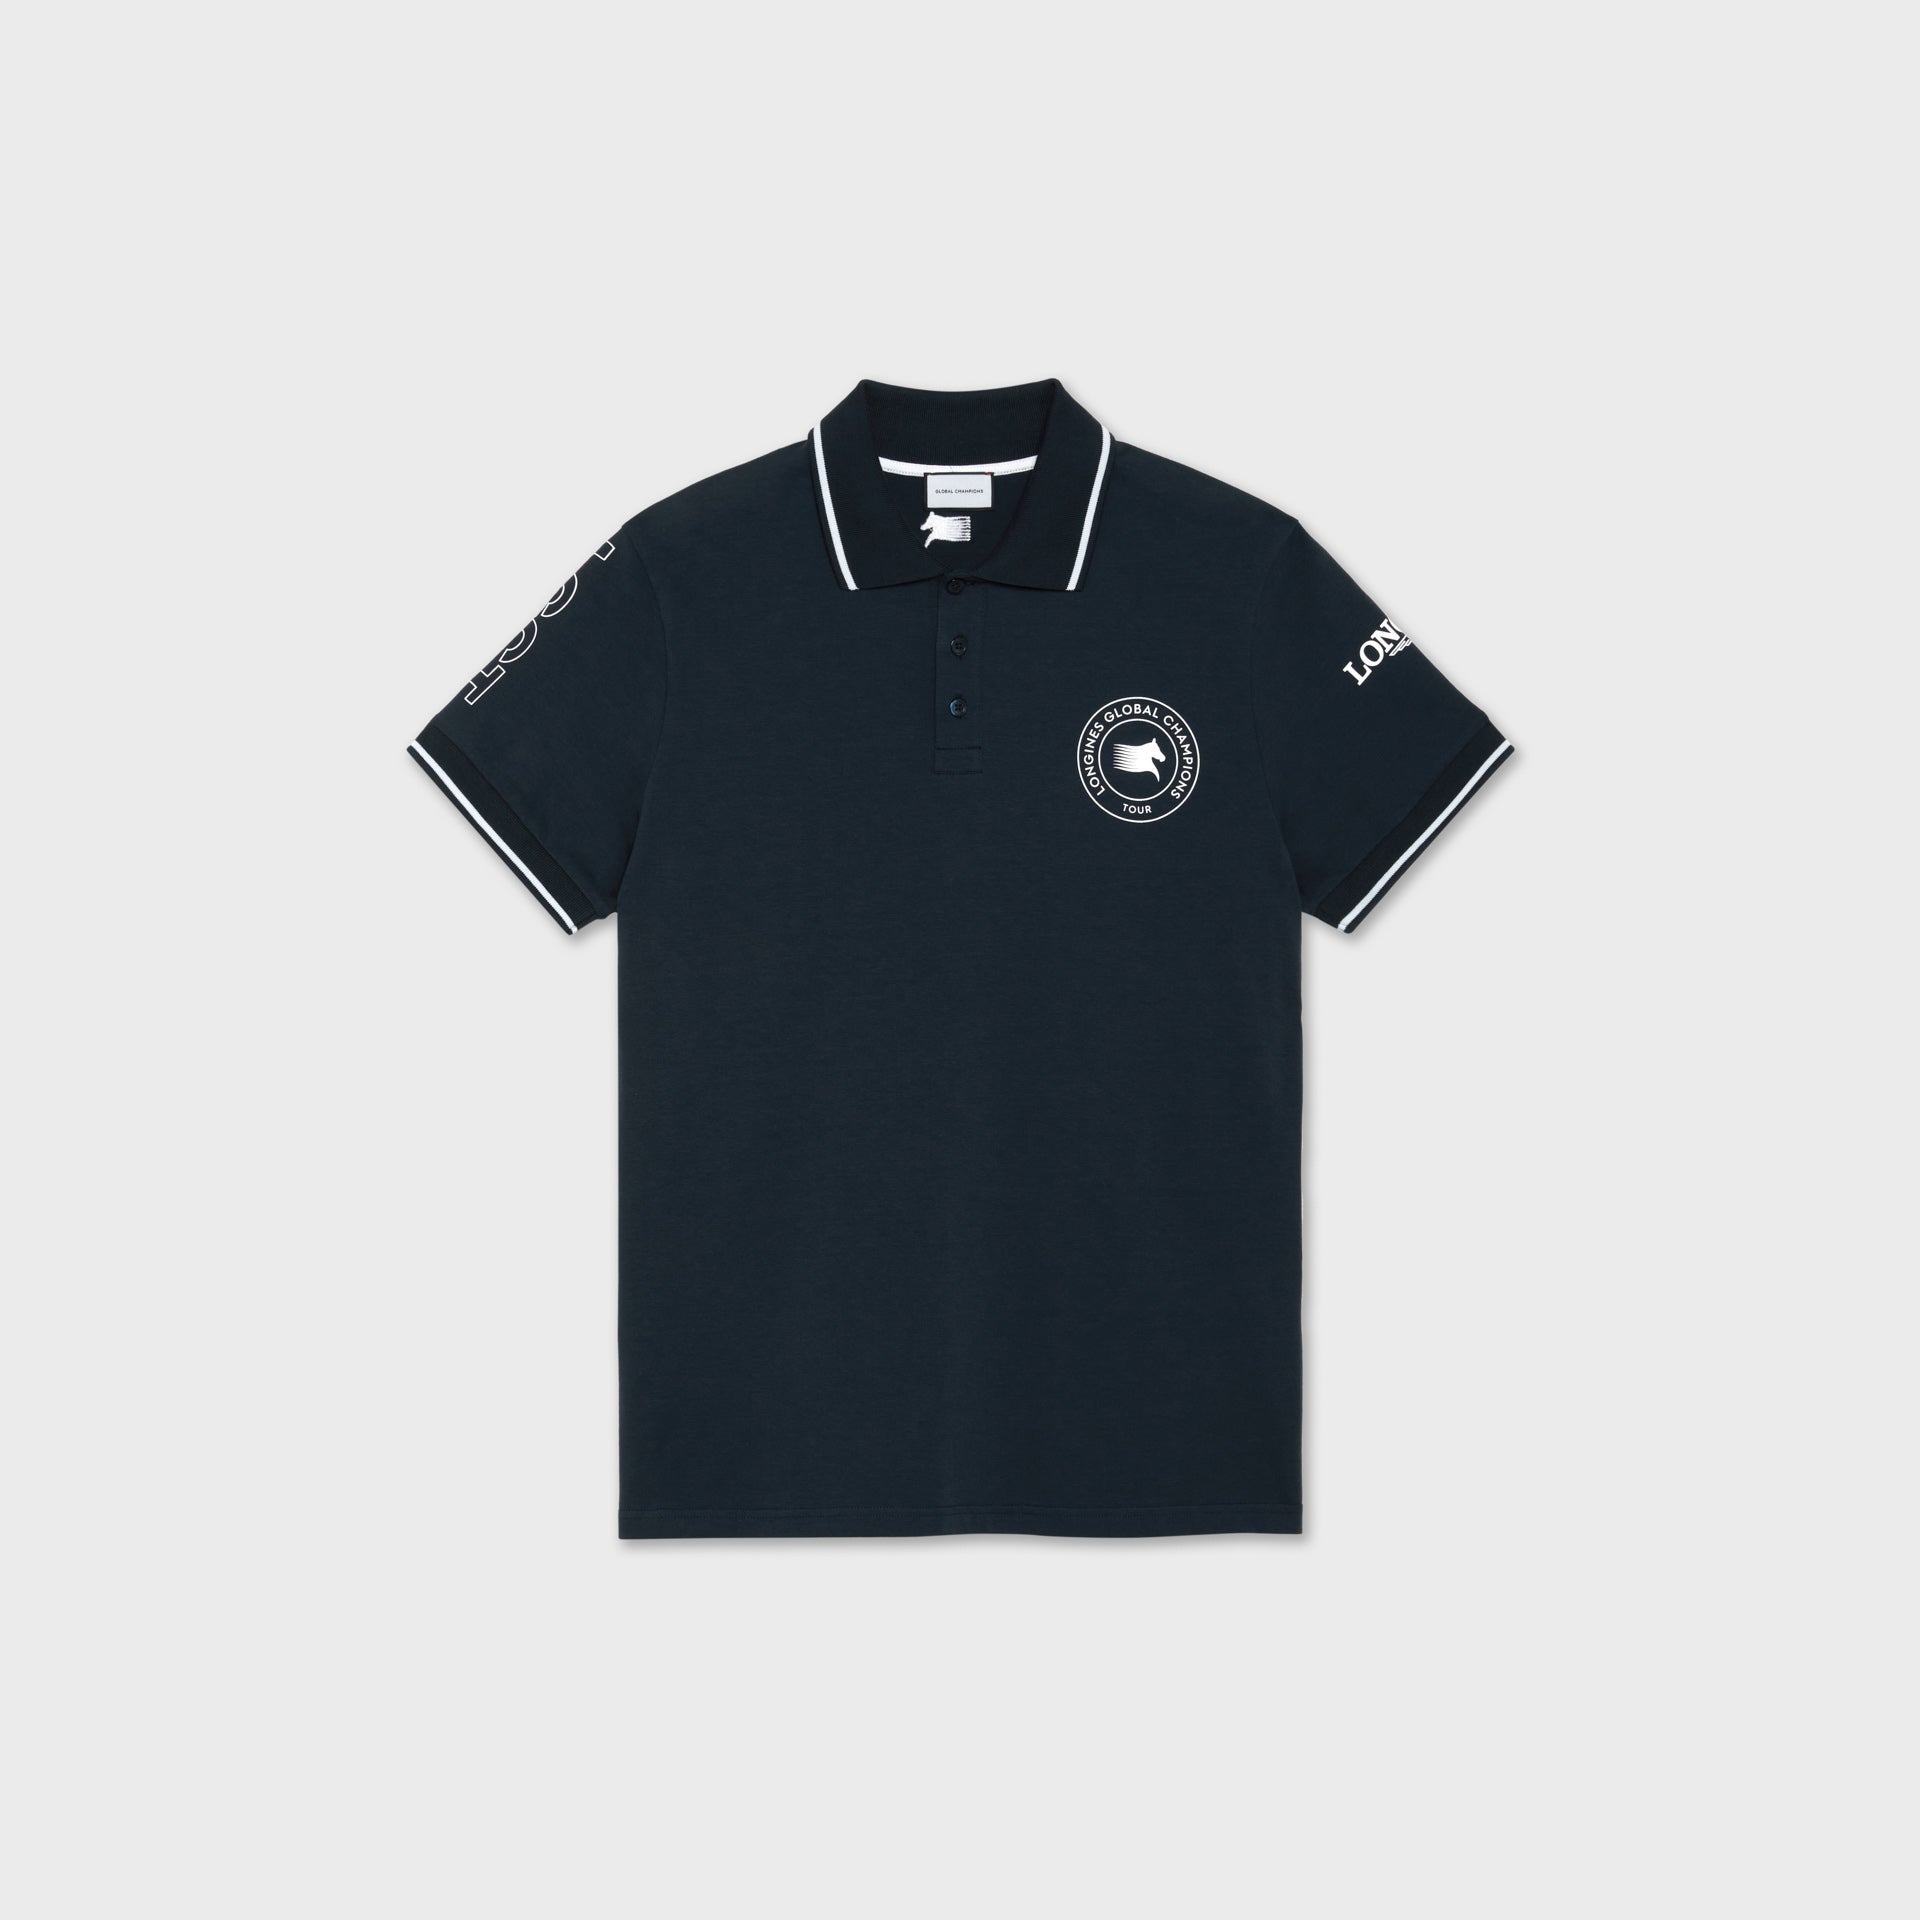 LGCT Essentials Unisex Polo Shirt - Navy Blue